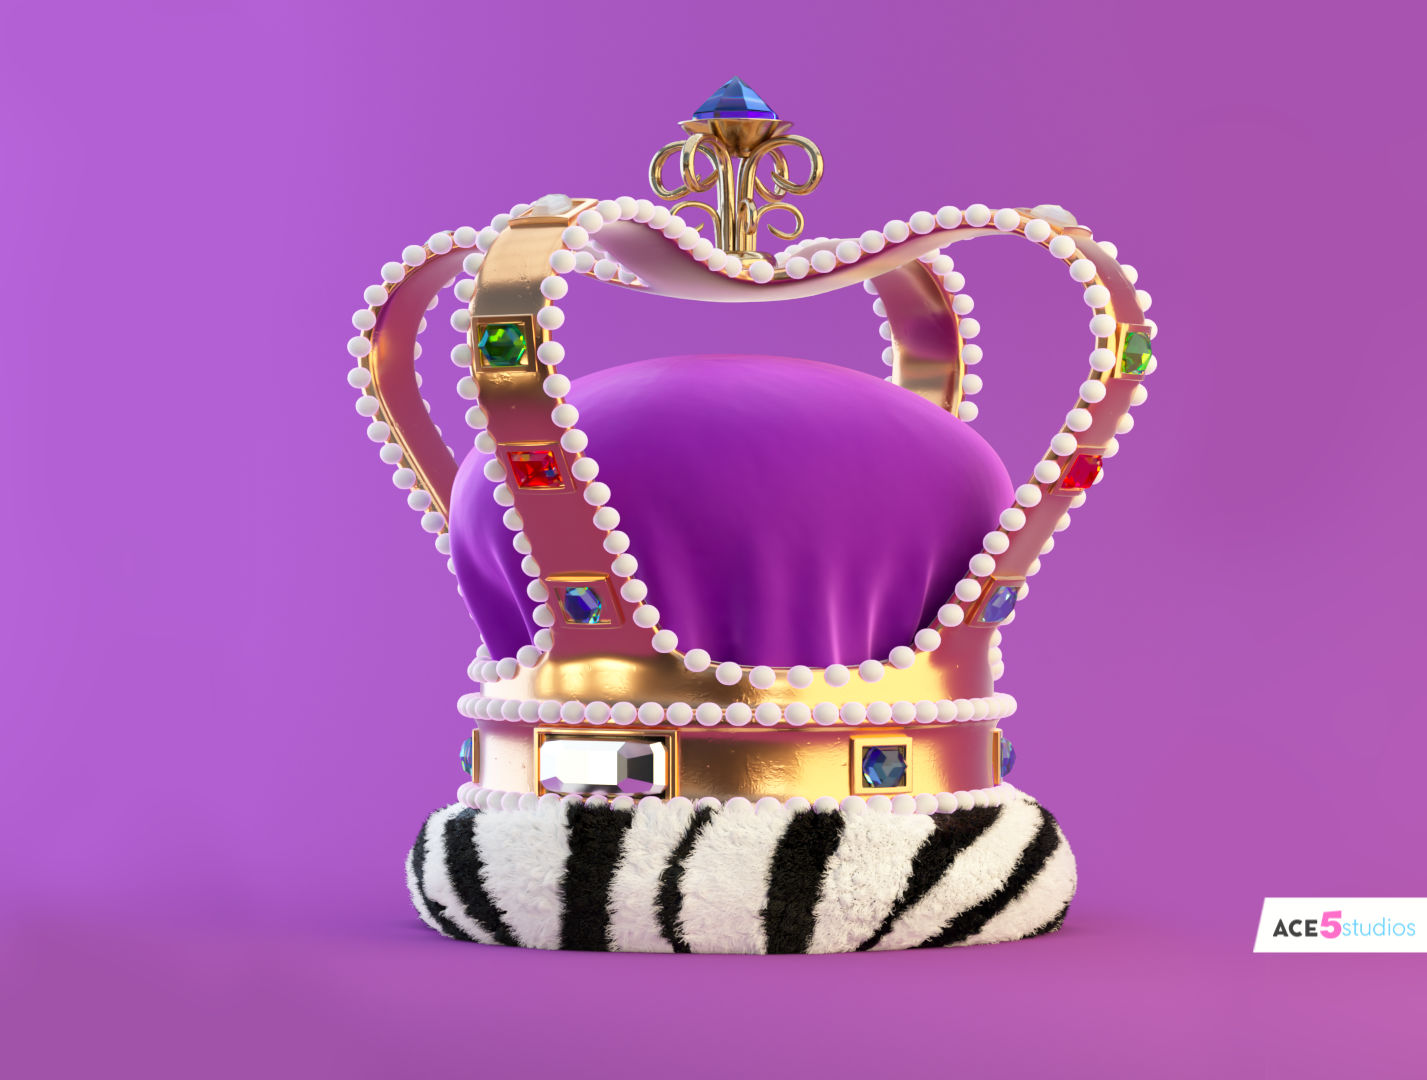 crown c4d model rendered in octane it's purple with zebra print